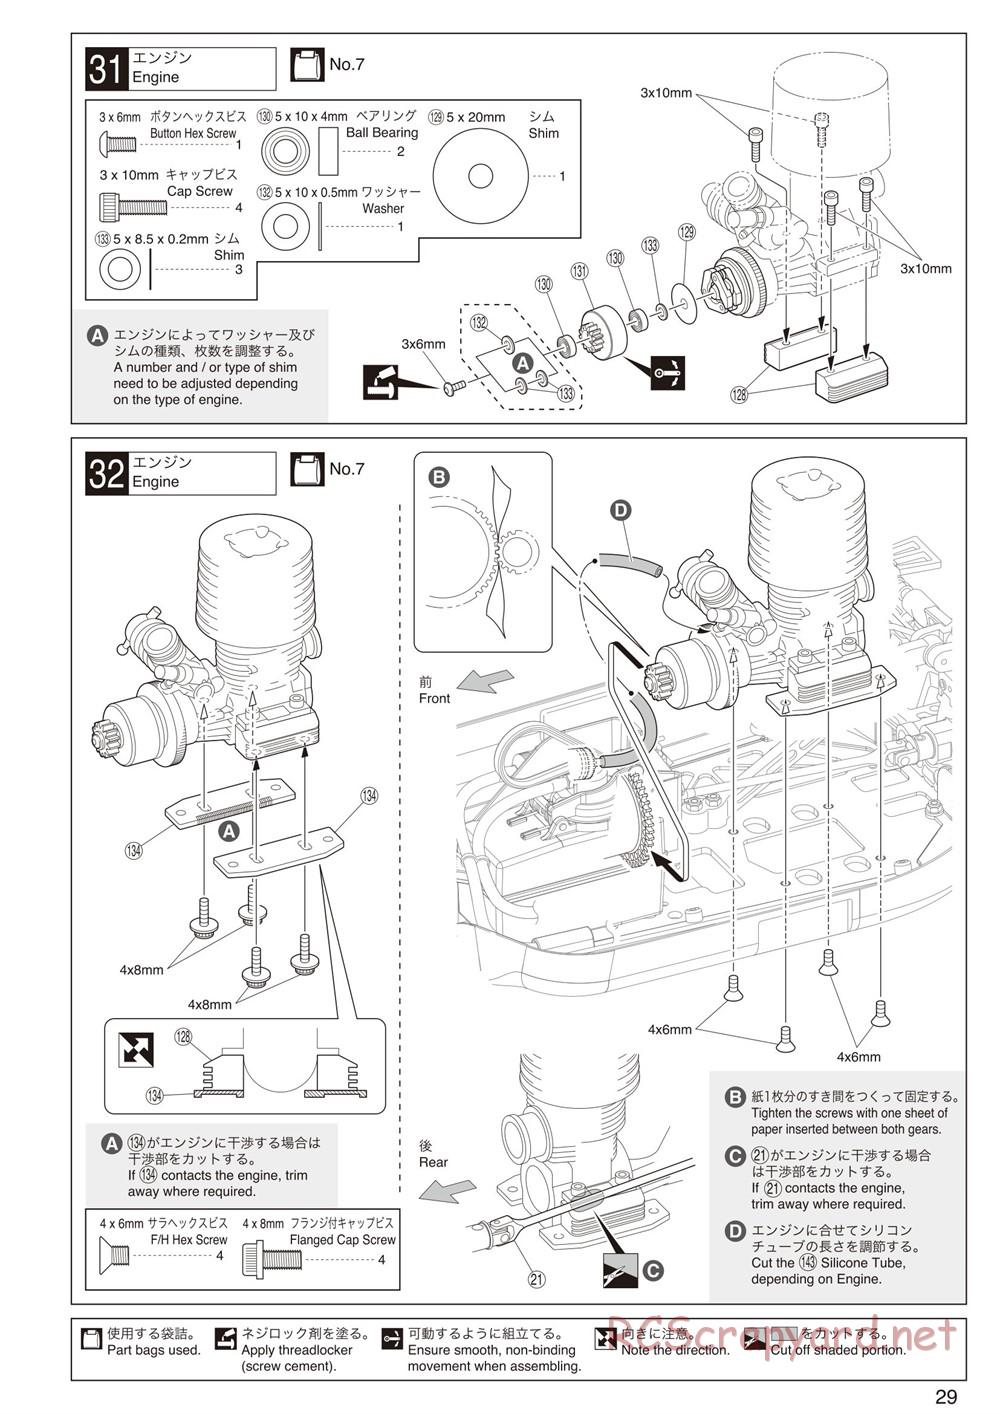 Kyosho - Inferno MP9 TKI4 - Manual - Page 29